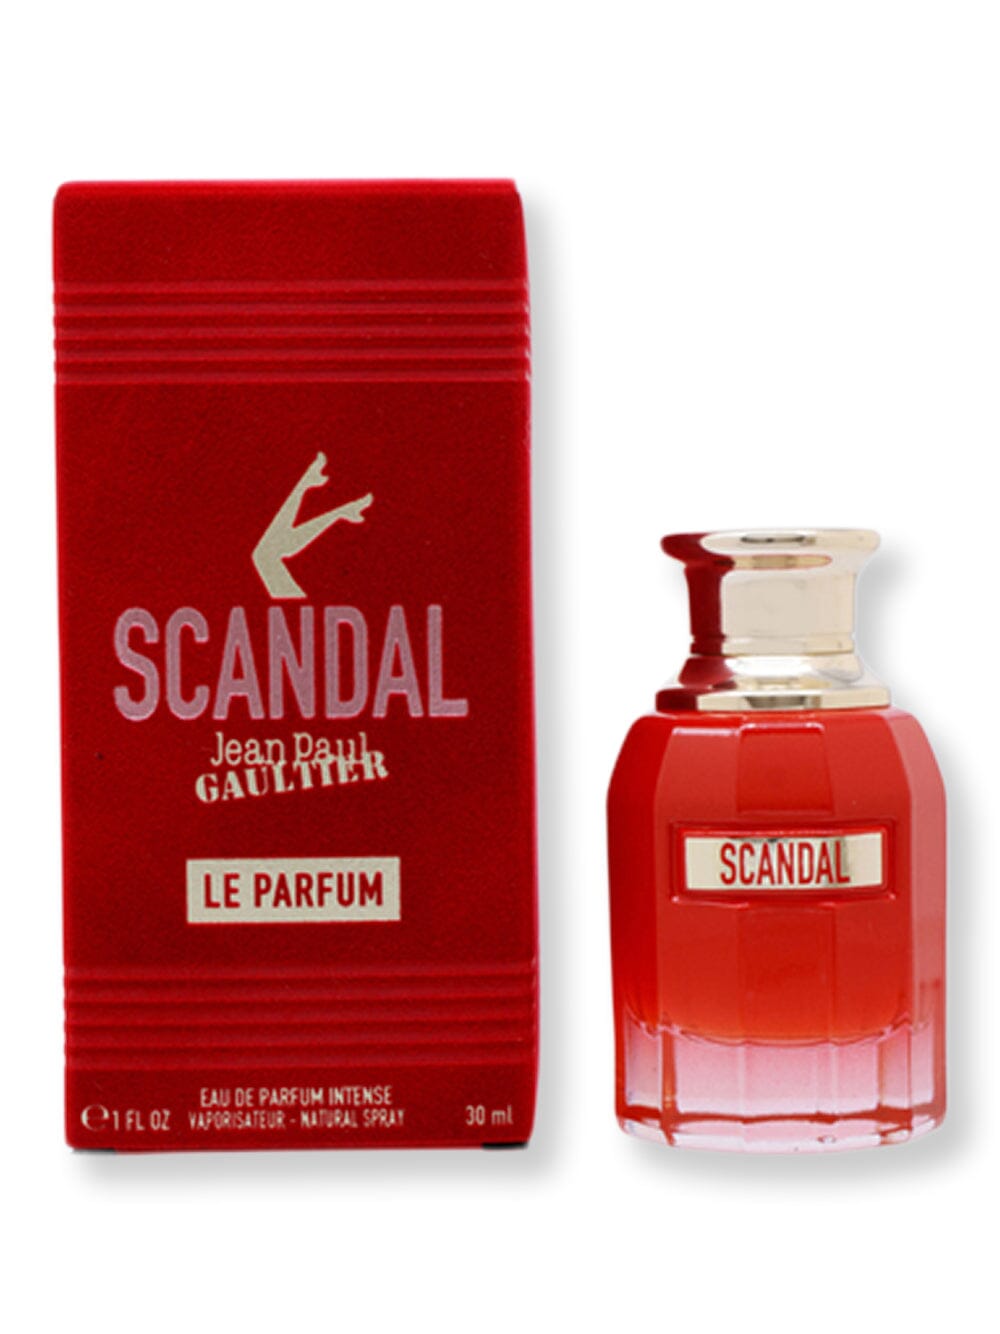 Jean Paul Gaultier Jean Paul Gaultier Scandal Le Parfum EDP Spray Intense 1 oz30 ml Perfume 